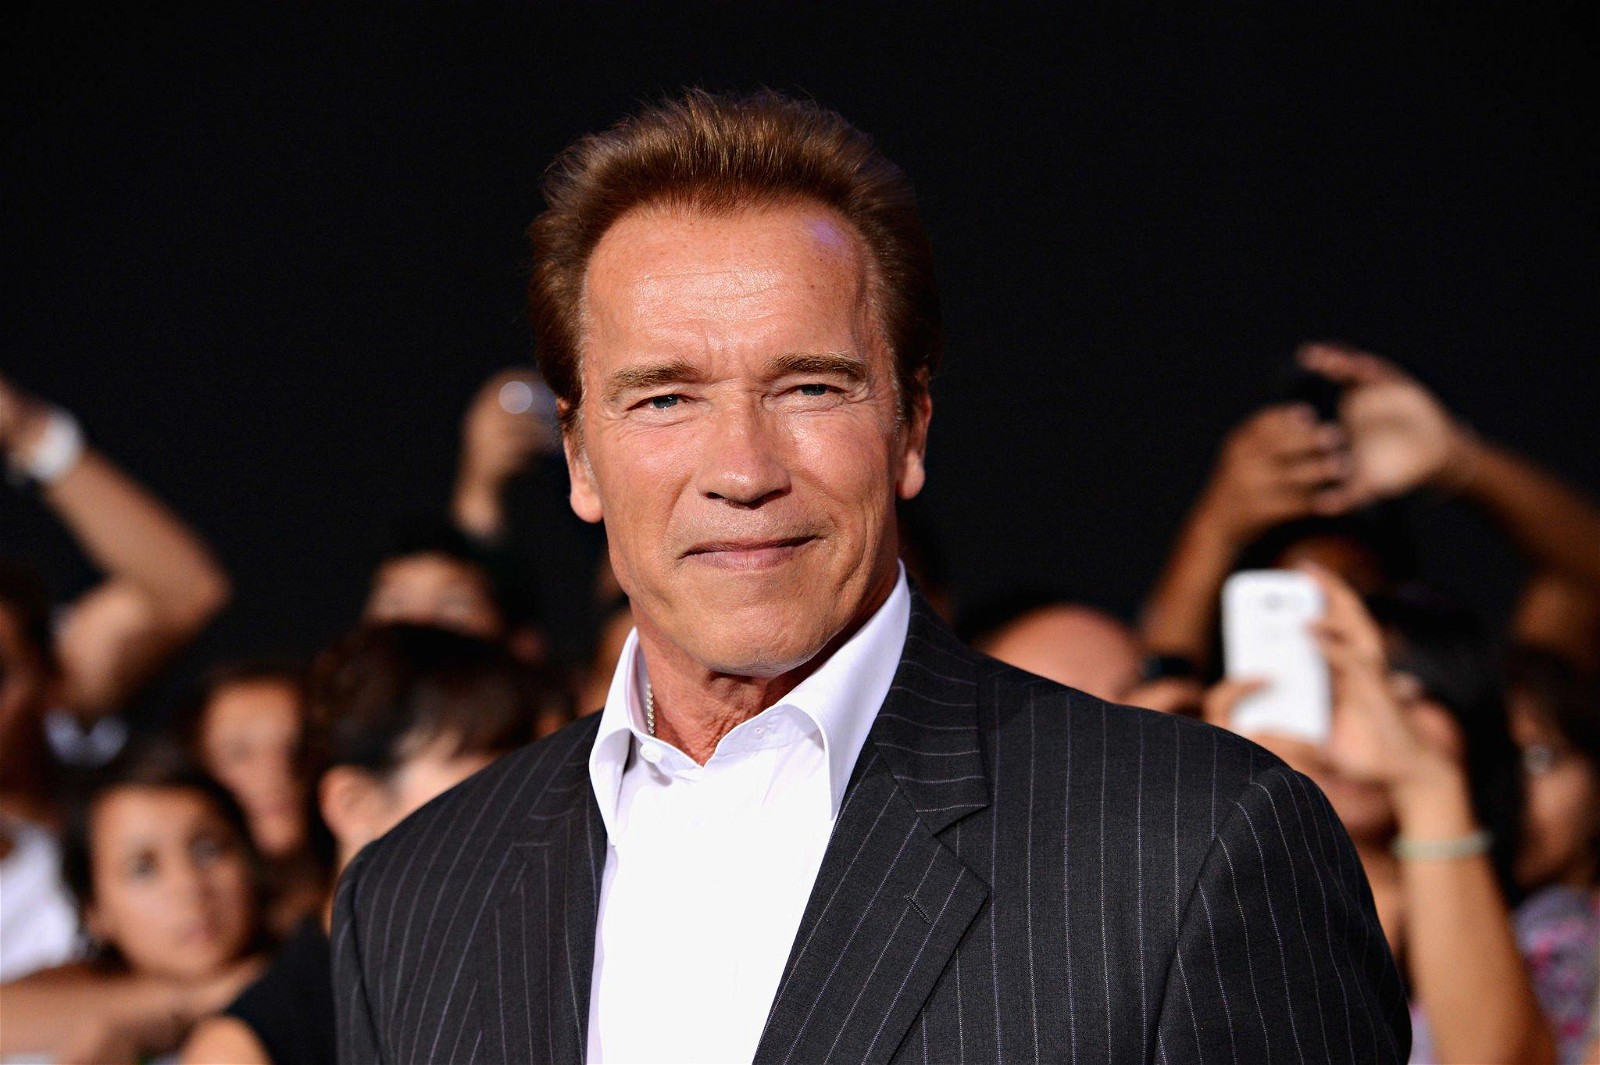 Arnold Schwarzenegger The Expendables 2 premiere